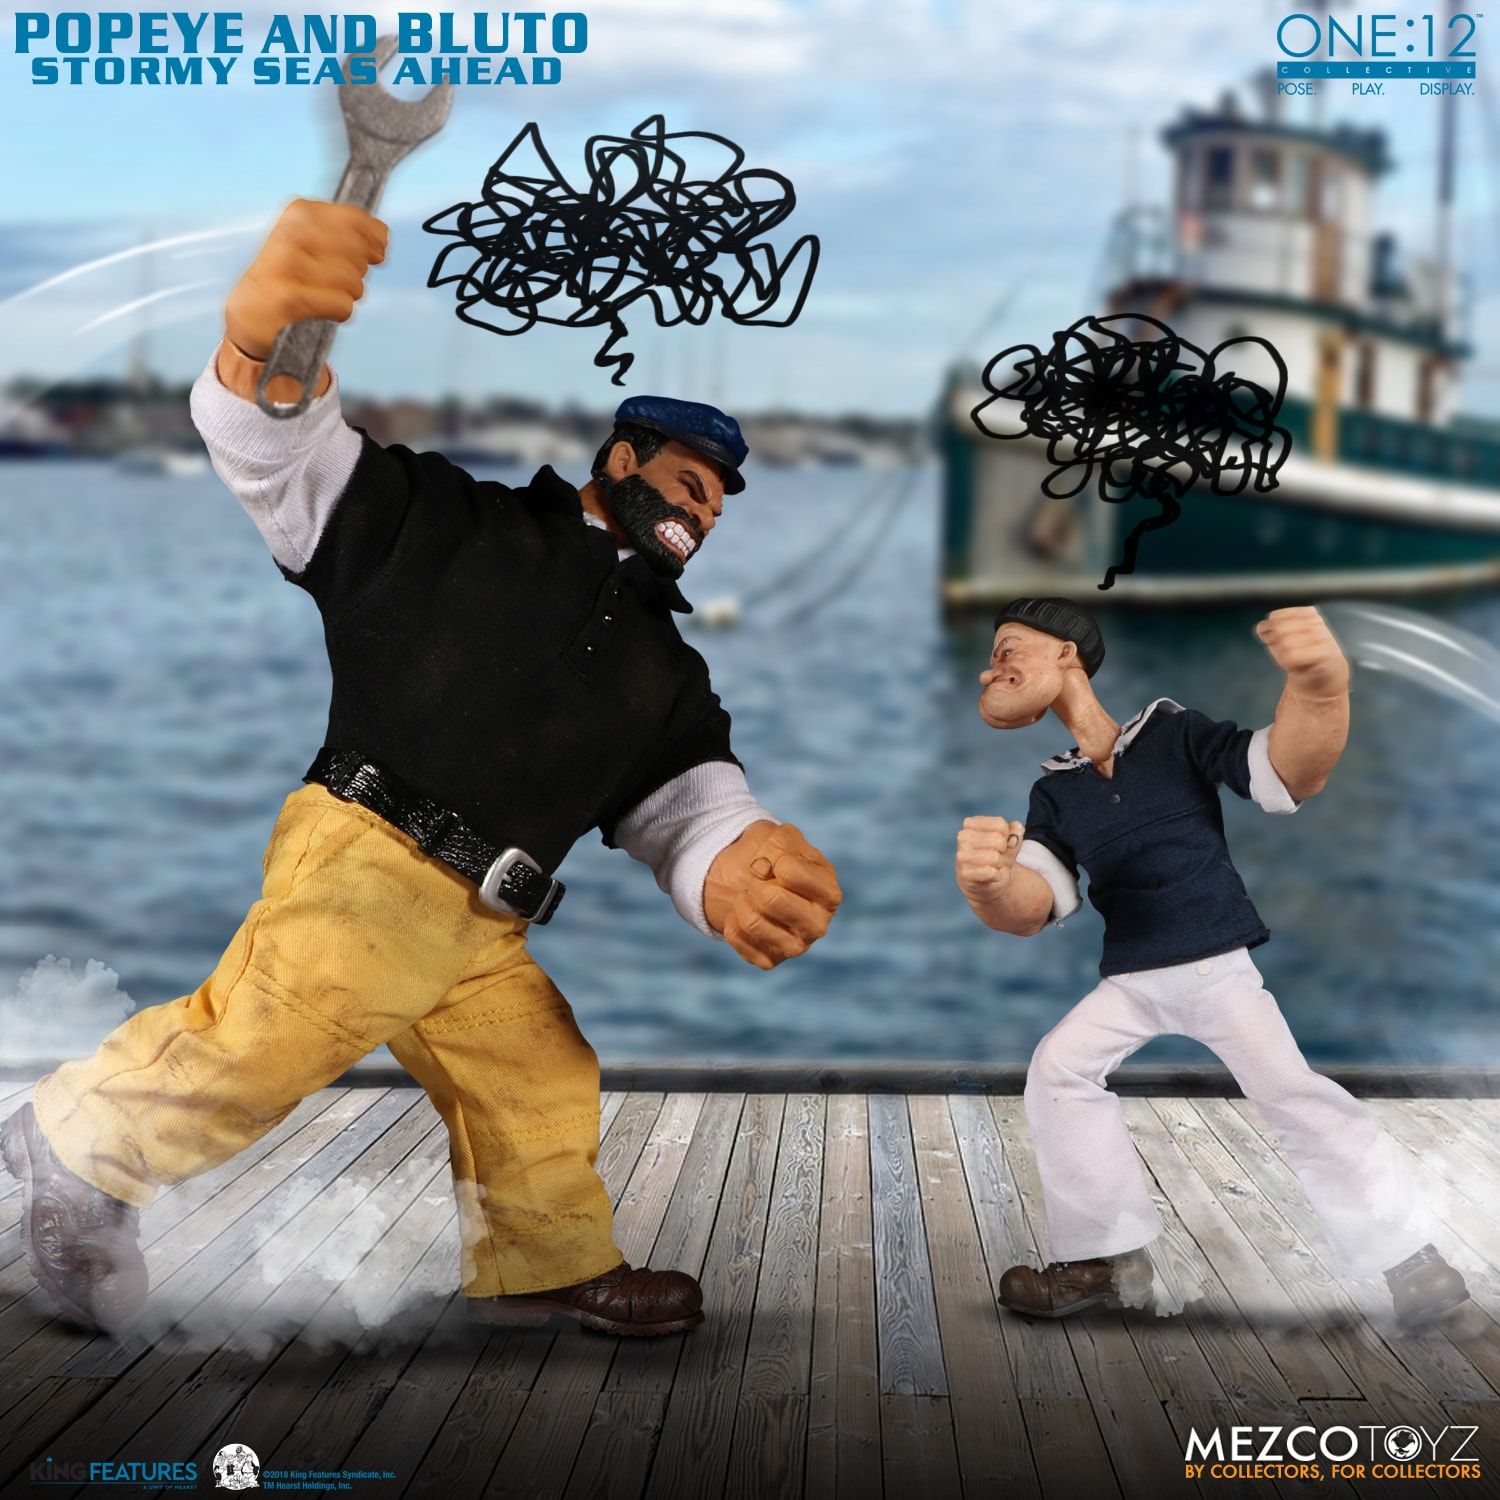 POPEYE & BLUTO Actionfiguren Stormy Seas Ahead Deluxe Box ONE:12 Mezco Toyz 16cm 